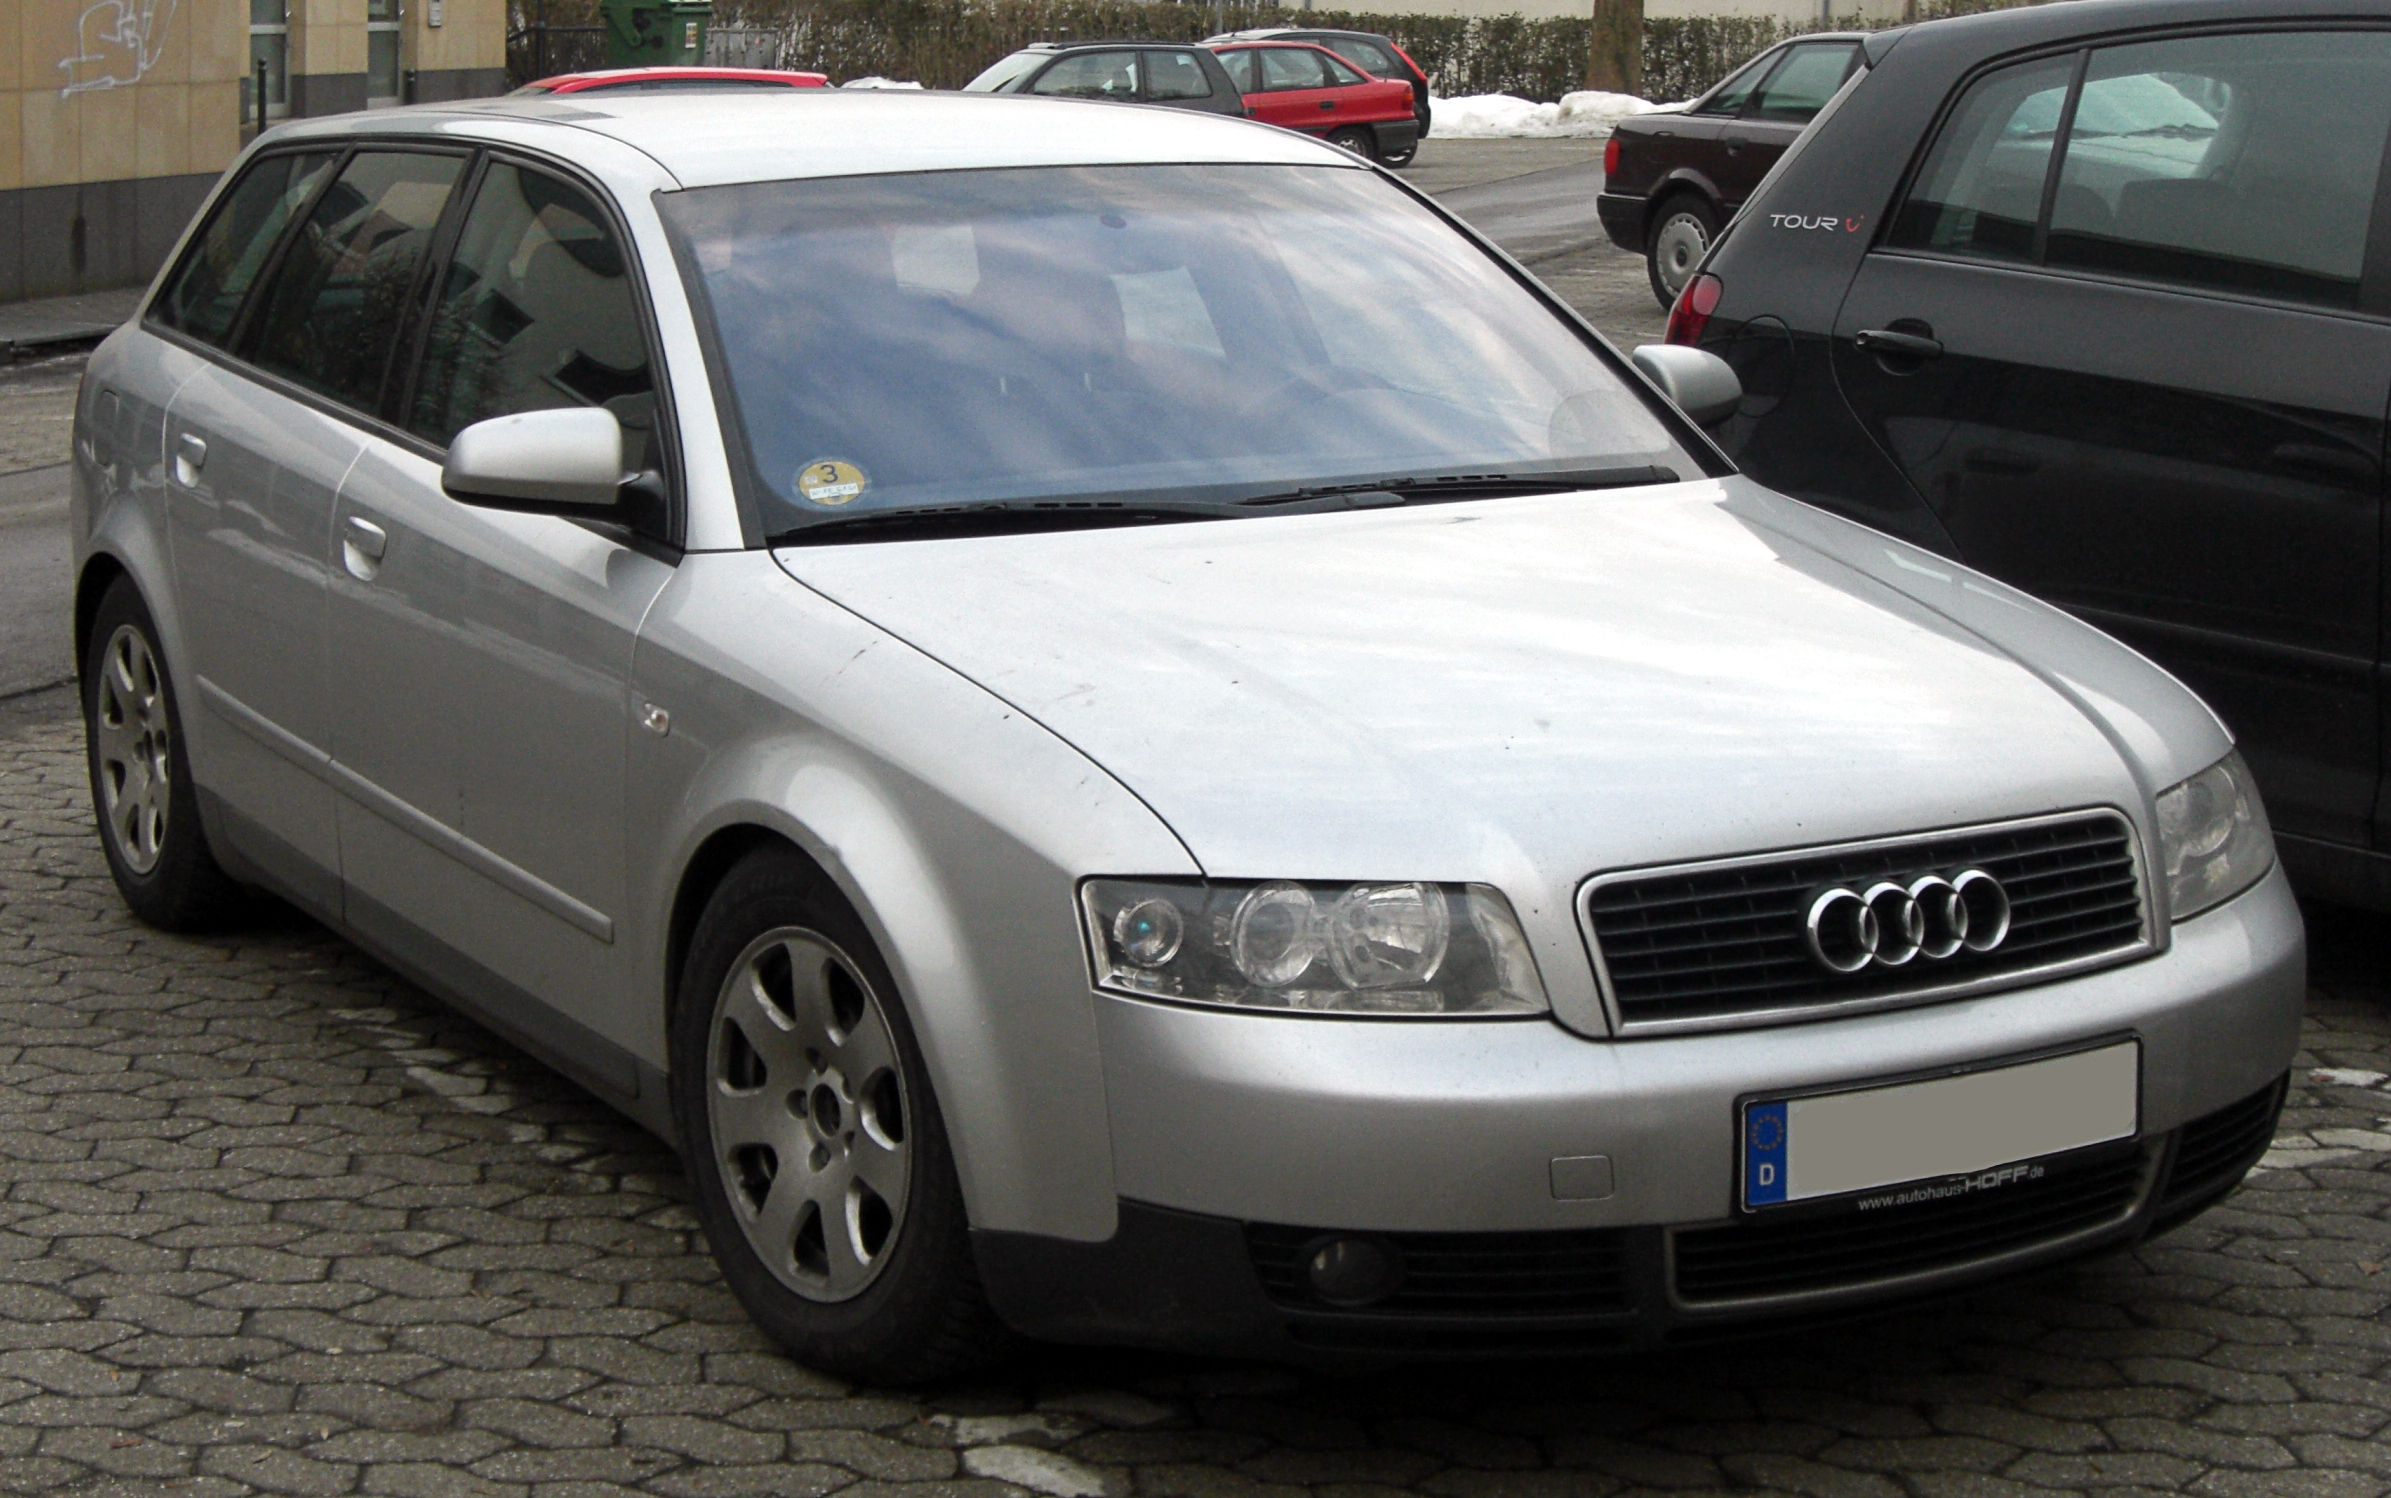 File:Audi A4 Avant front.JPG - Wikimedia Commons